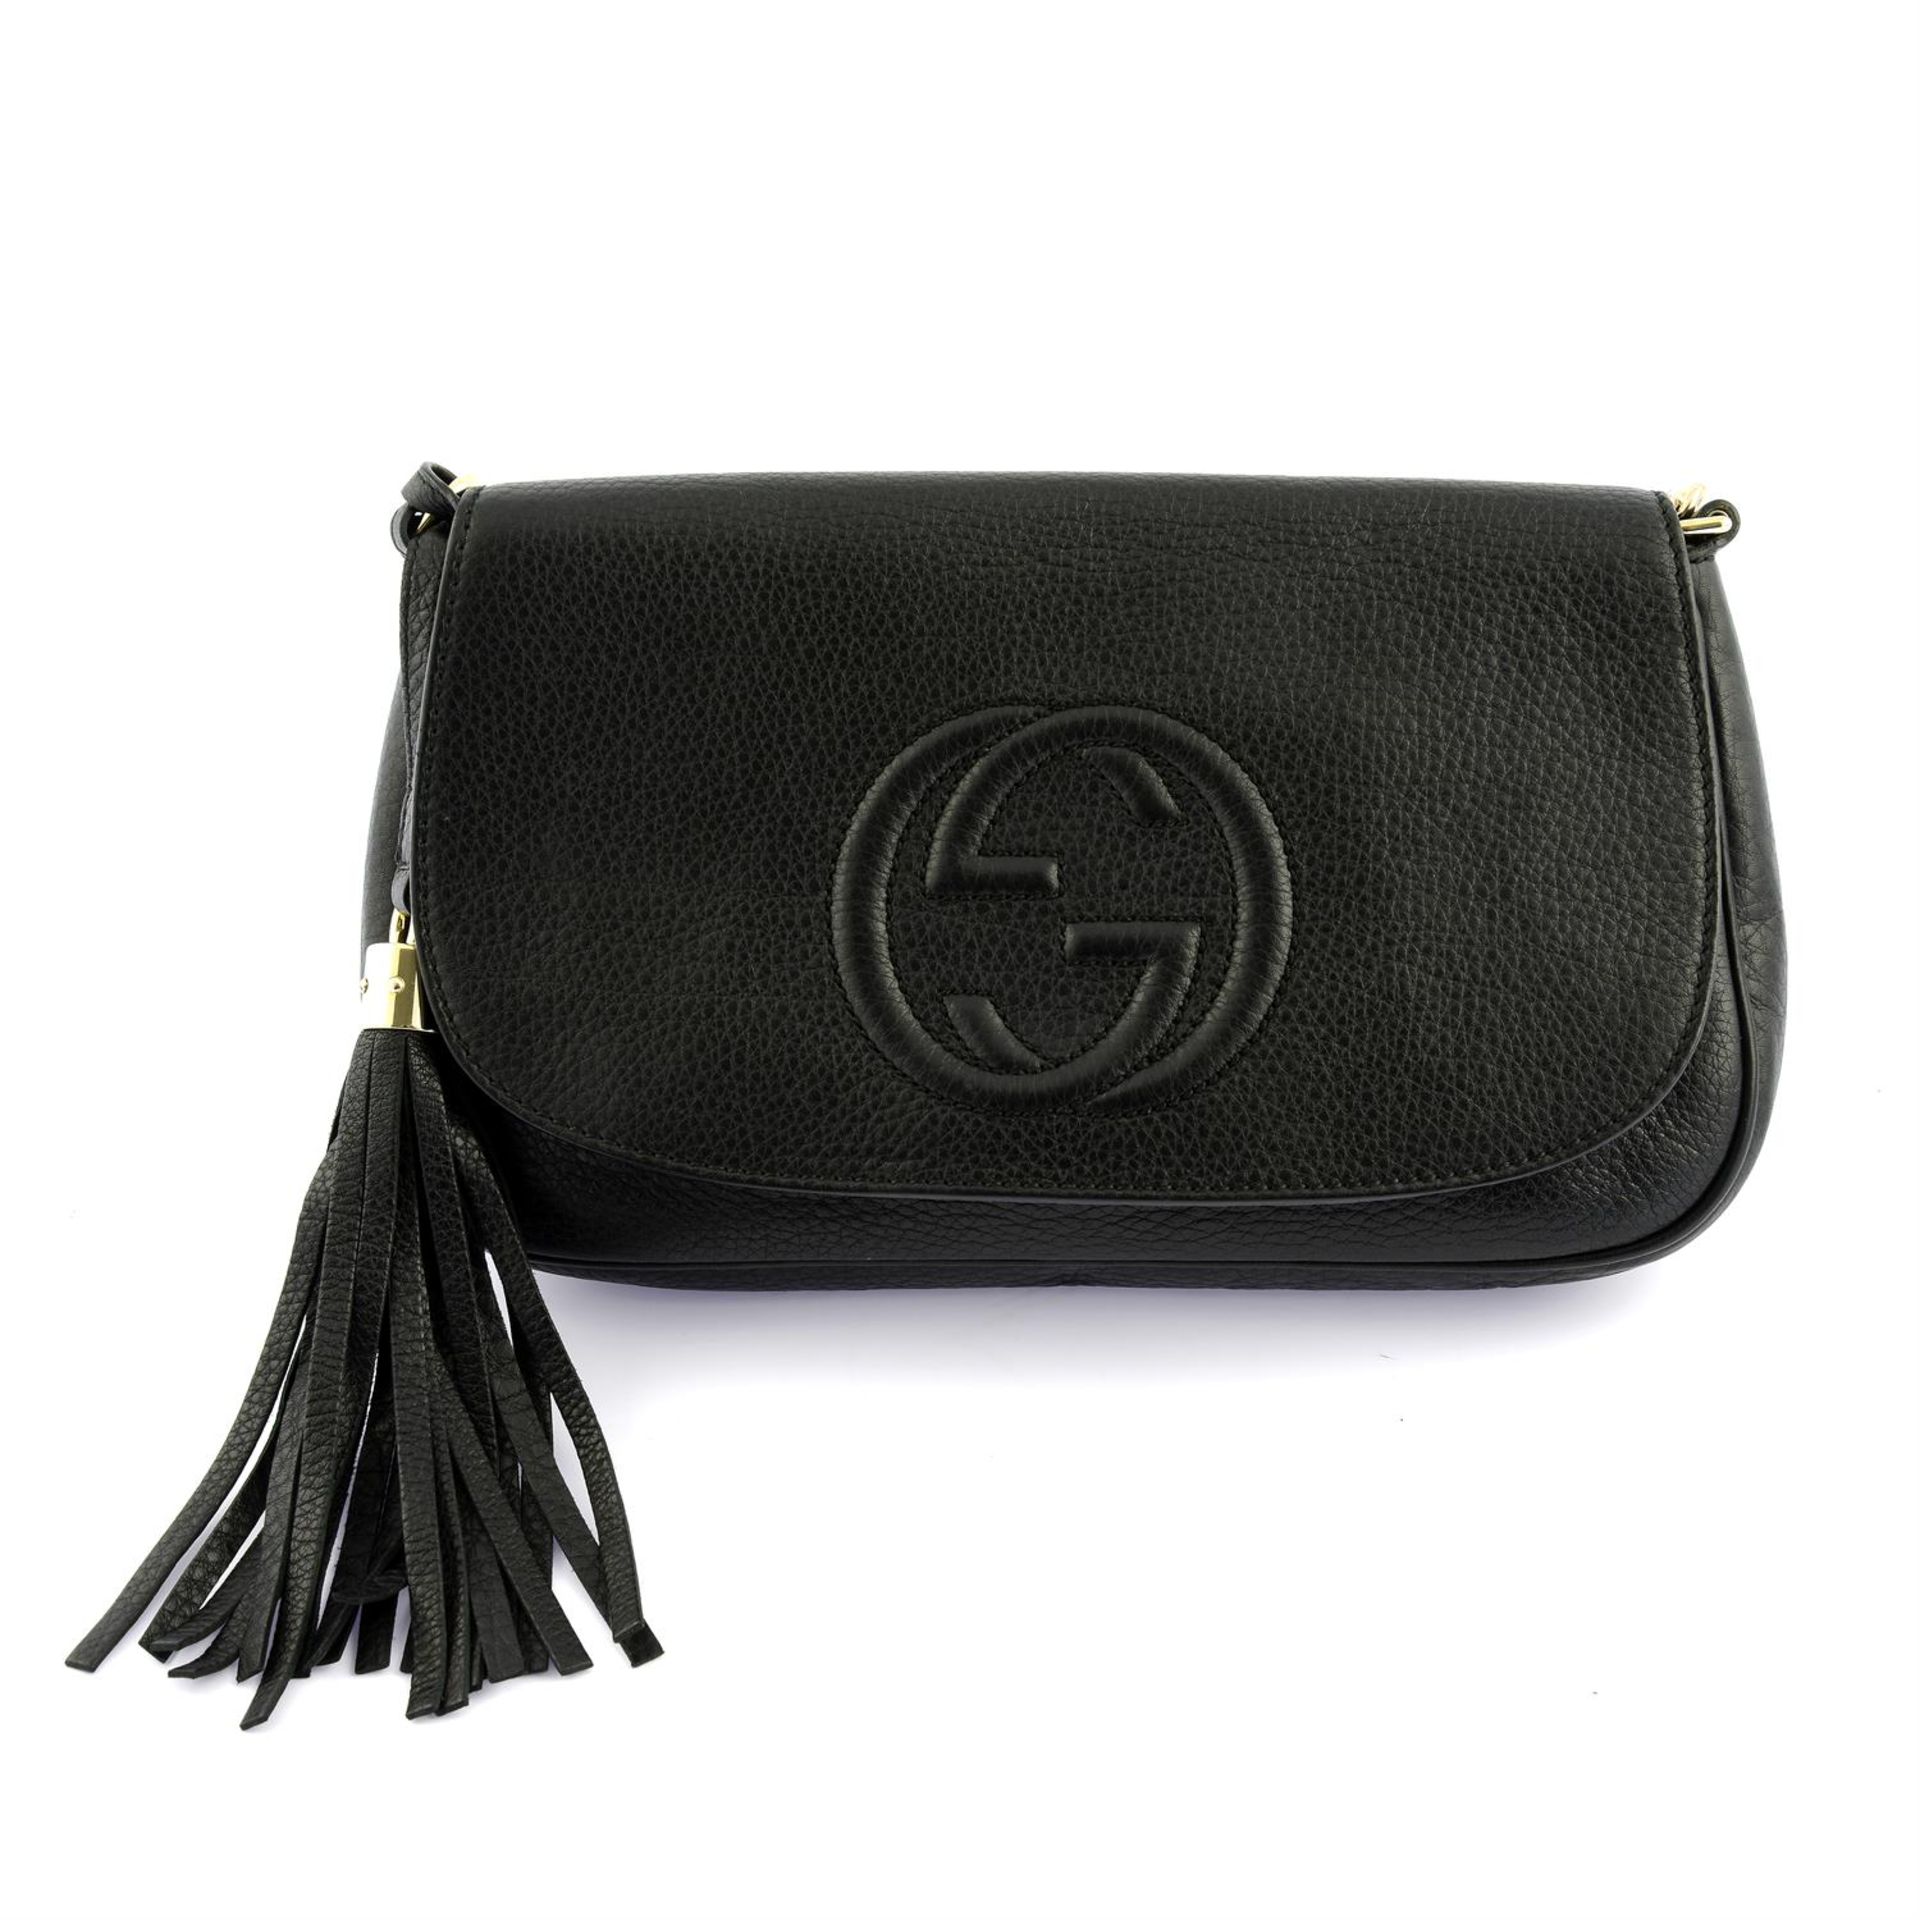 GUCCI - a black leather Soho crossbody bag.